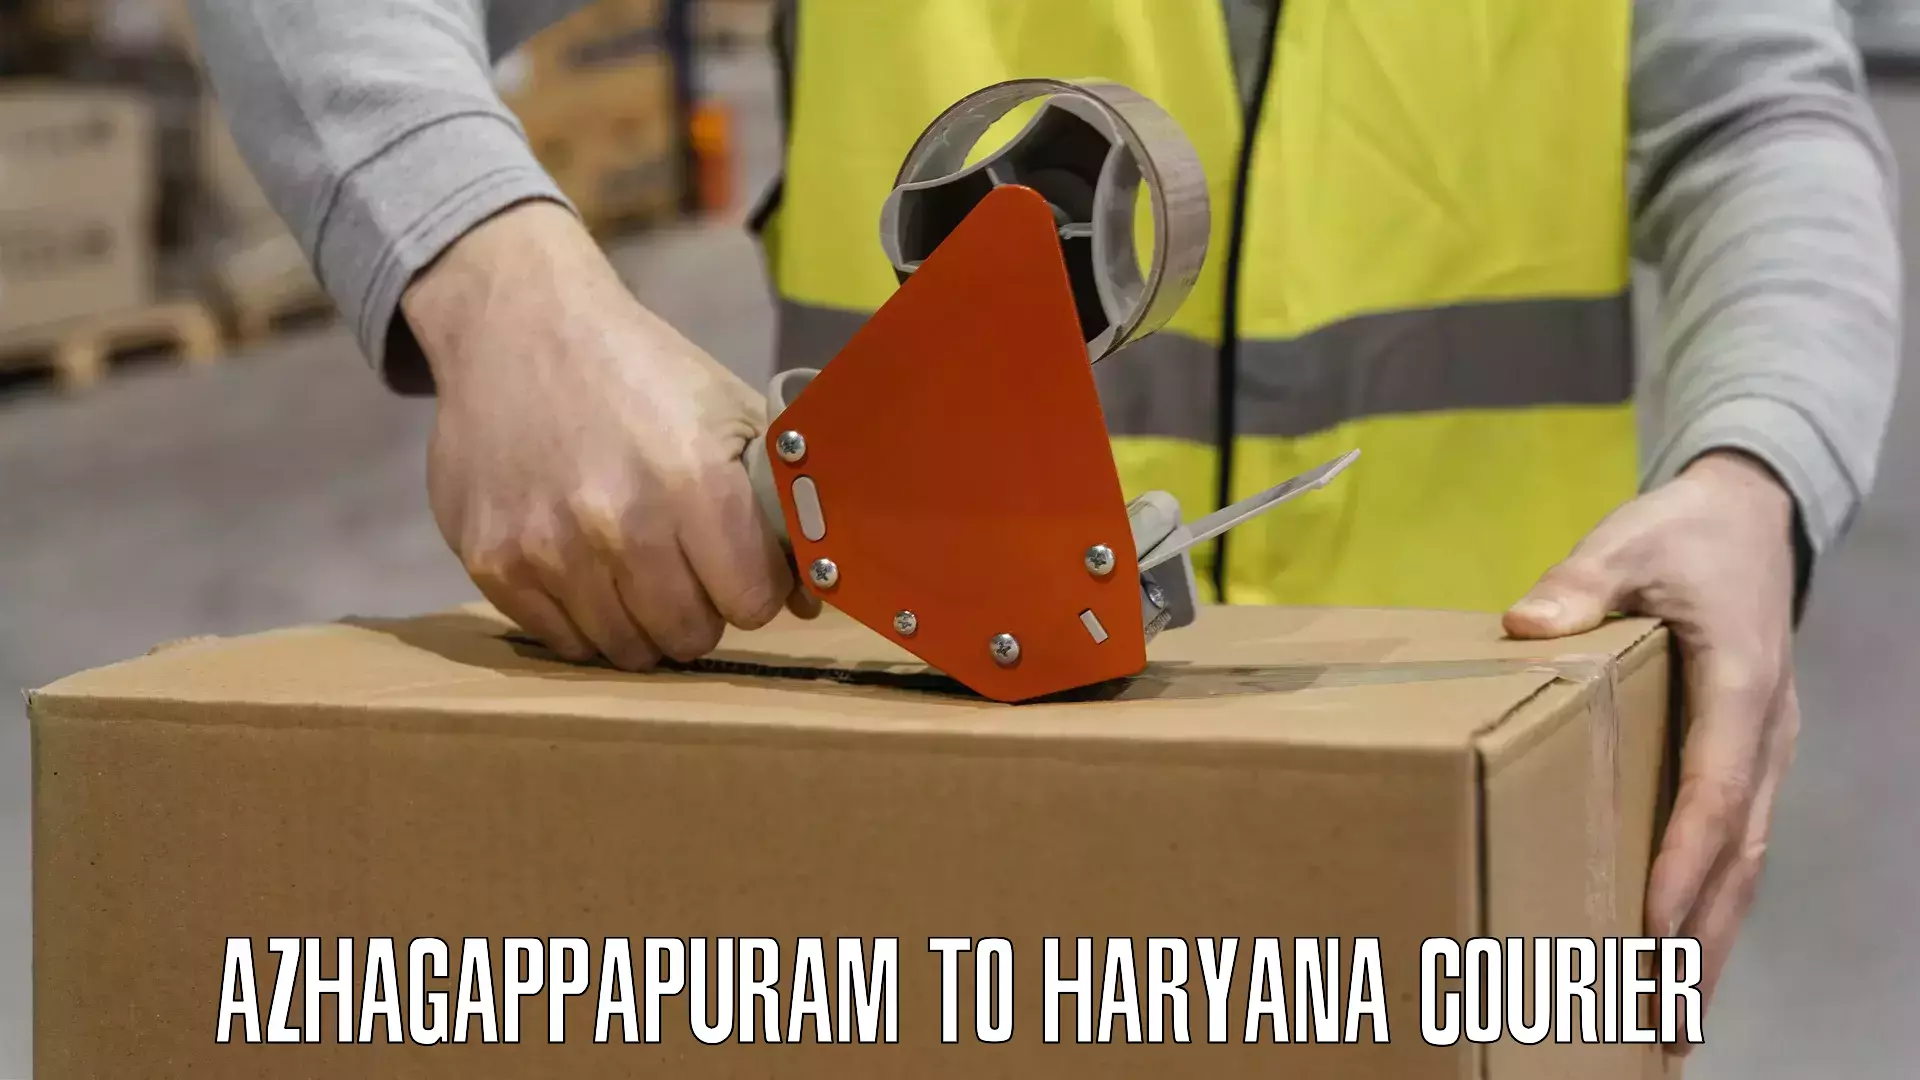 Courier service efficiency Azhagappapuram to Haryana